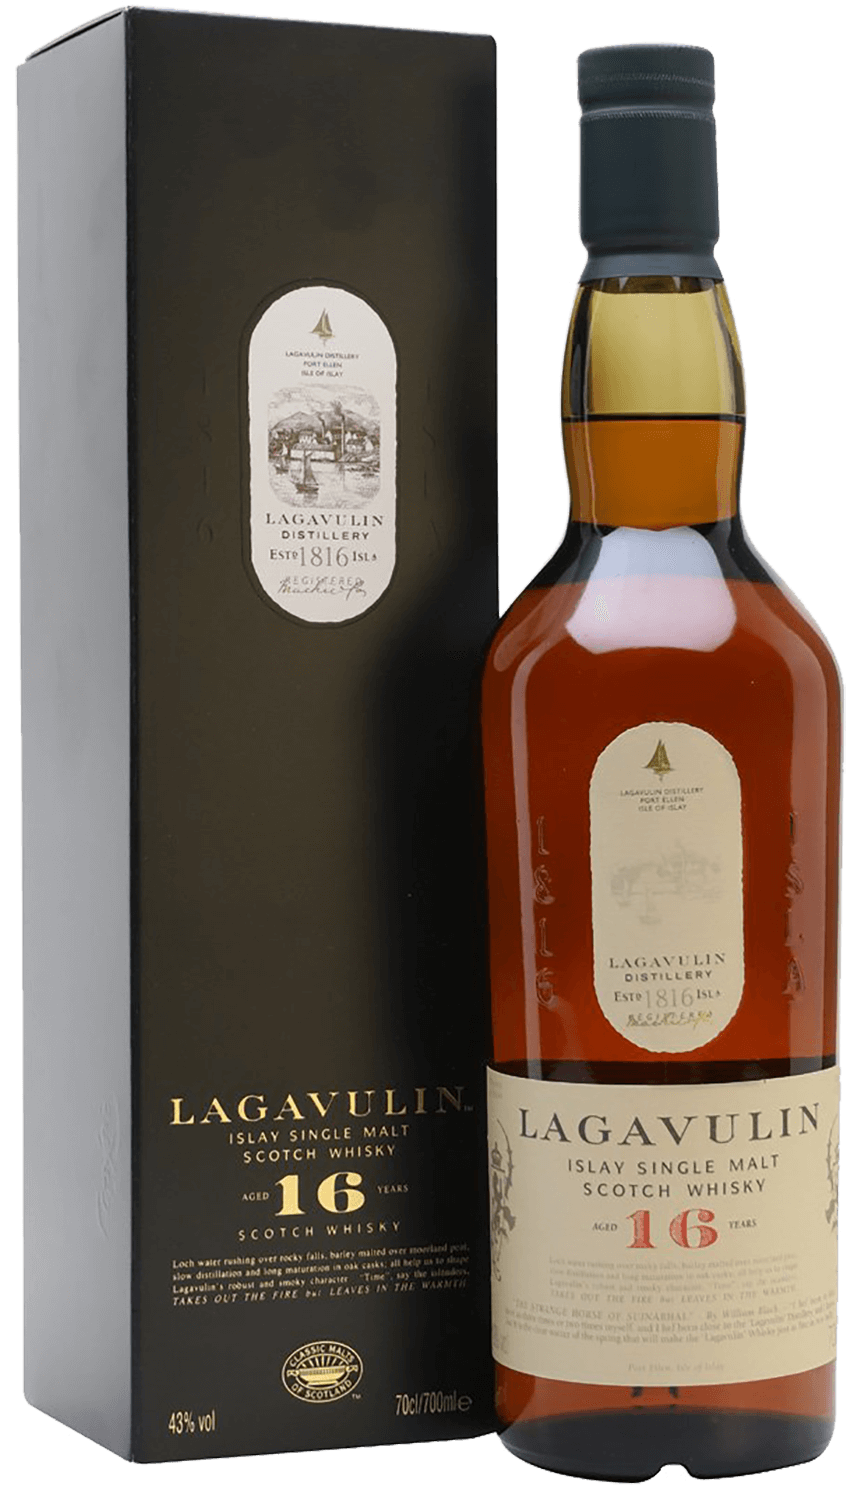 Lagavulin Islay single malt scotch whisky 16 Years Old (gift box) aultmore 18 years old speyside single malt scotch whisky gift box